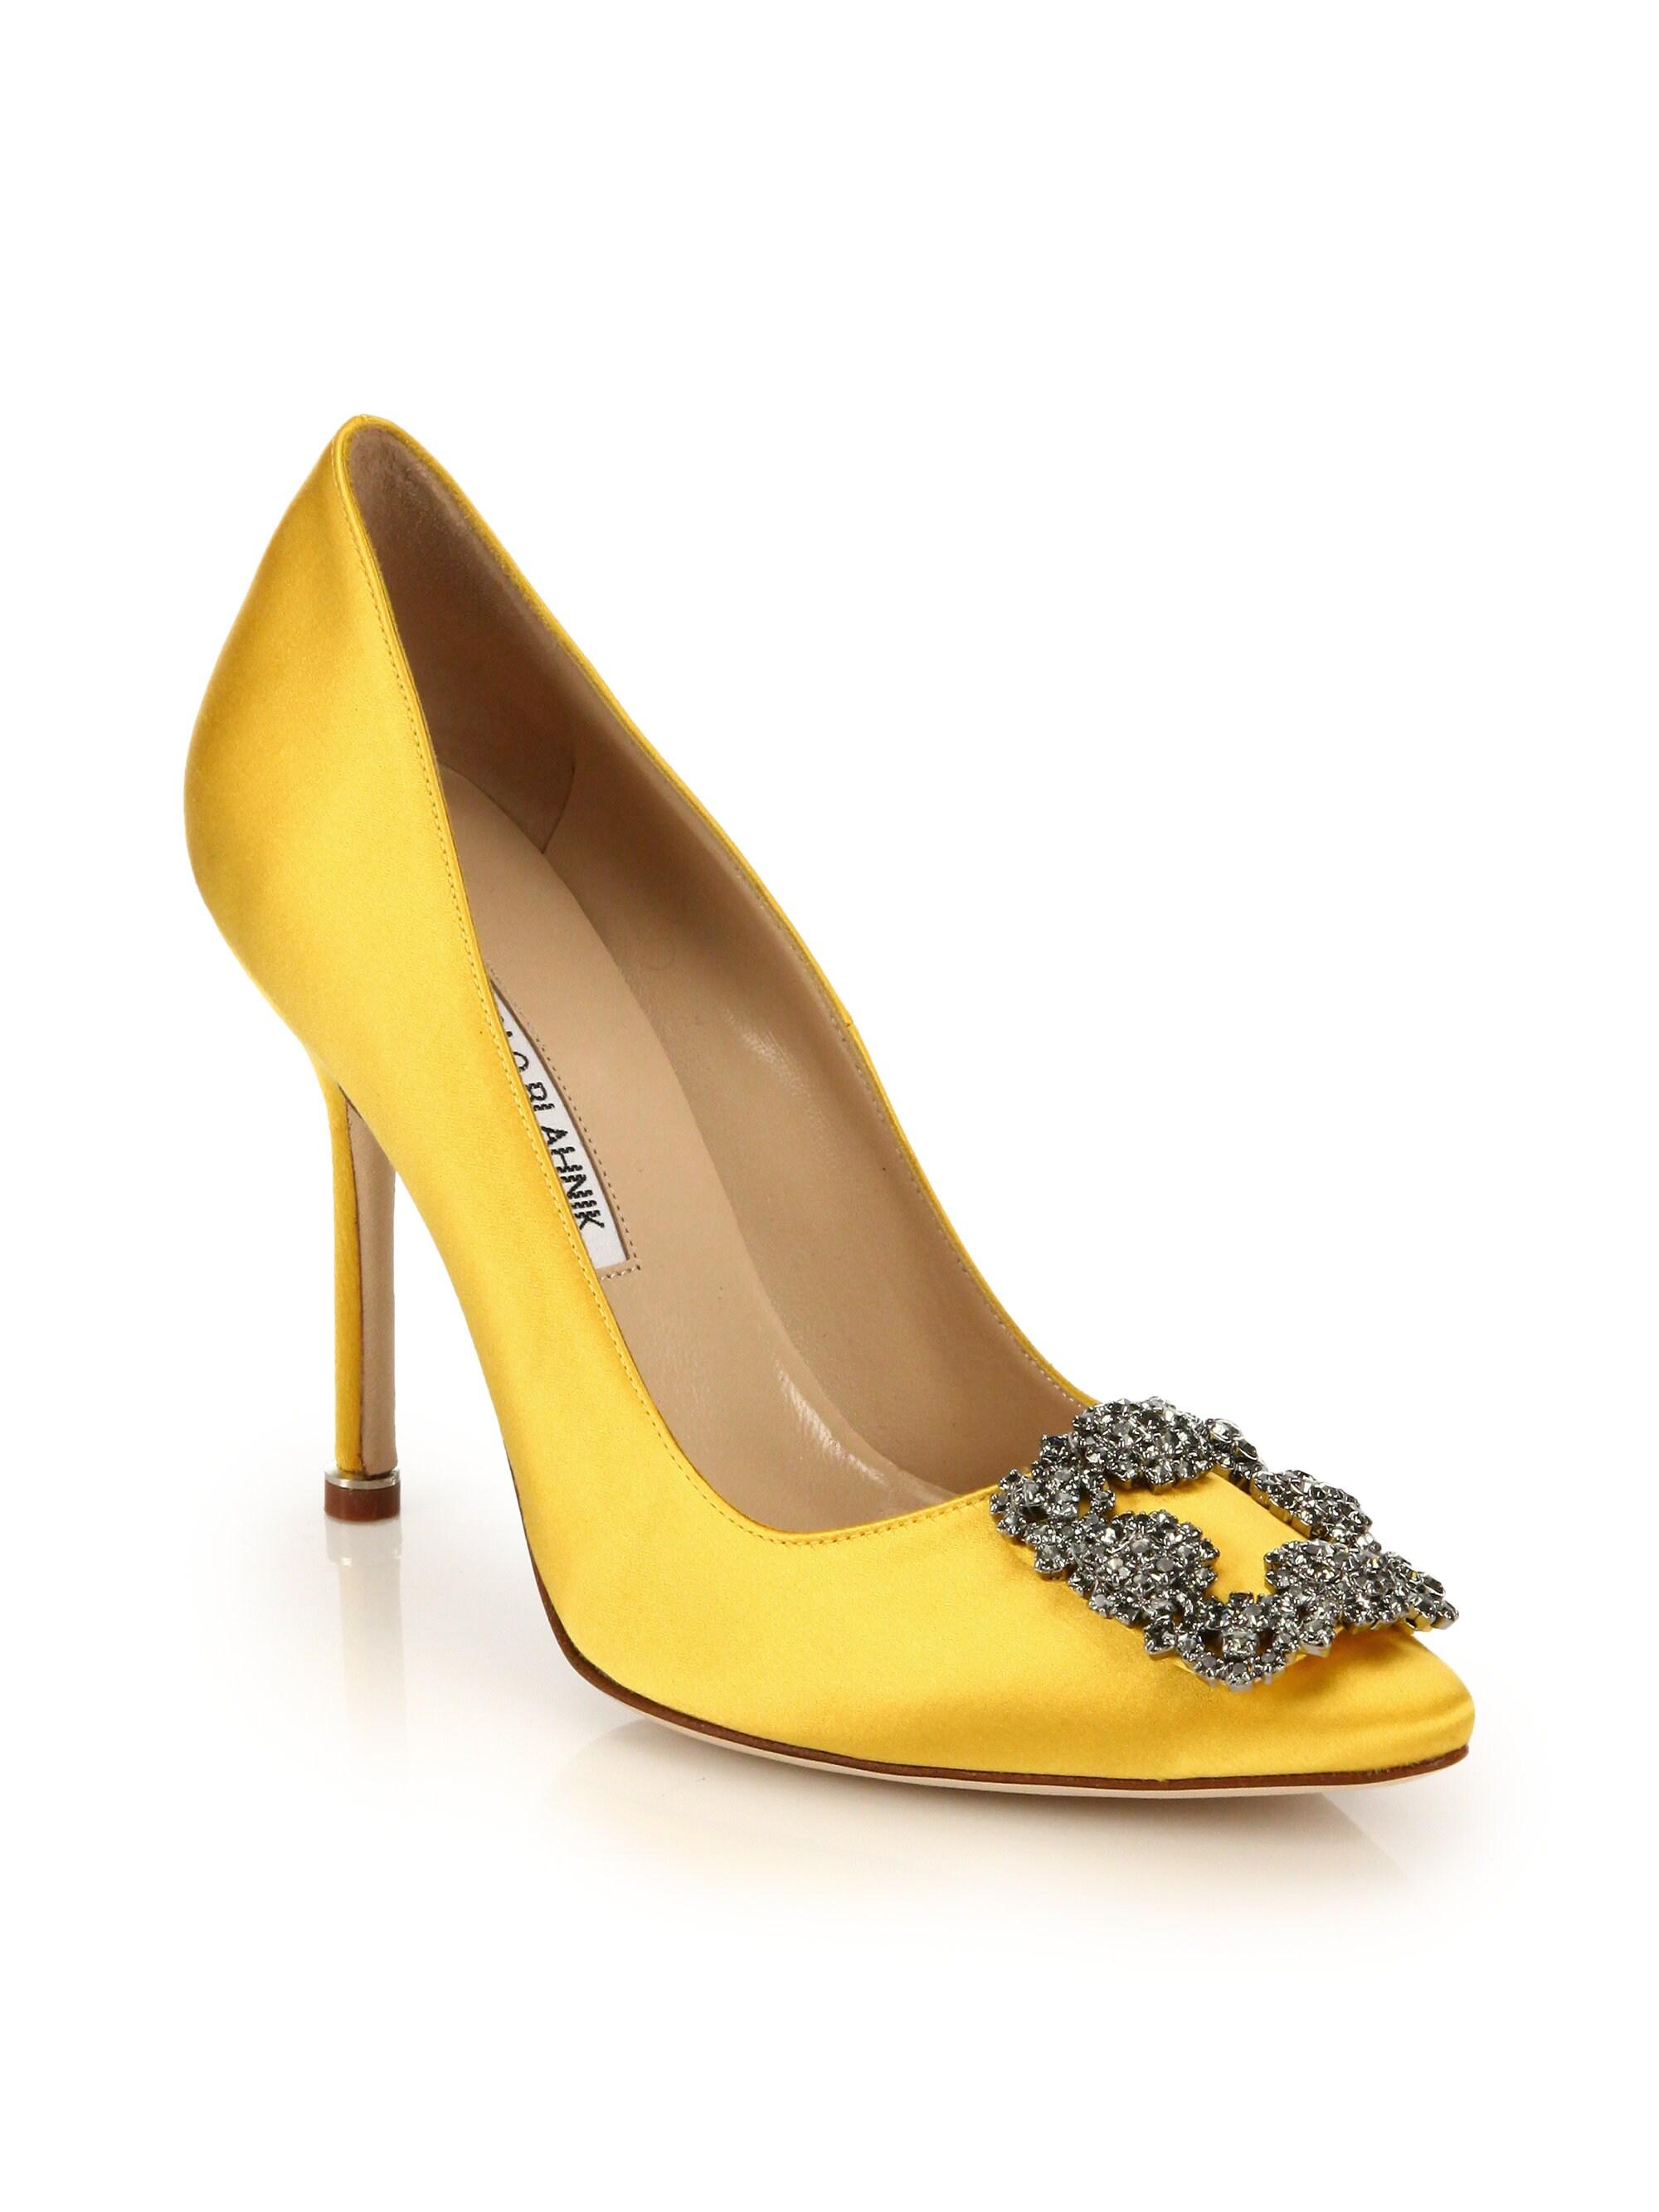 yellow manolo blahnik shoes